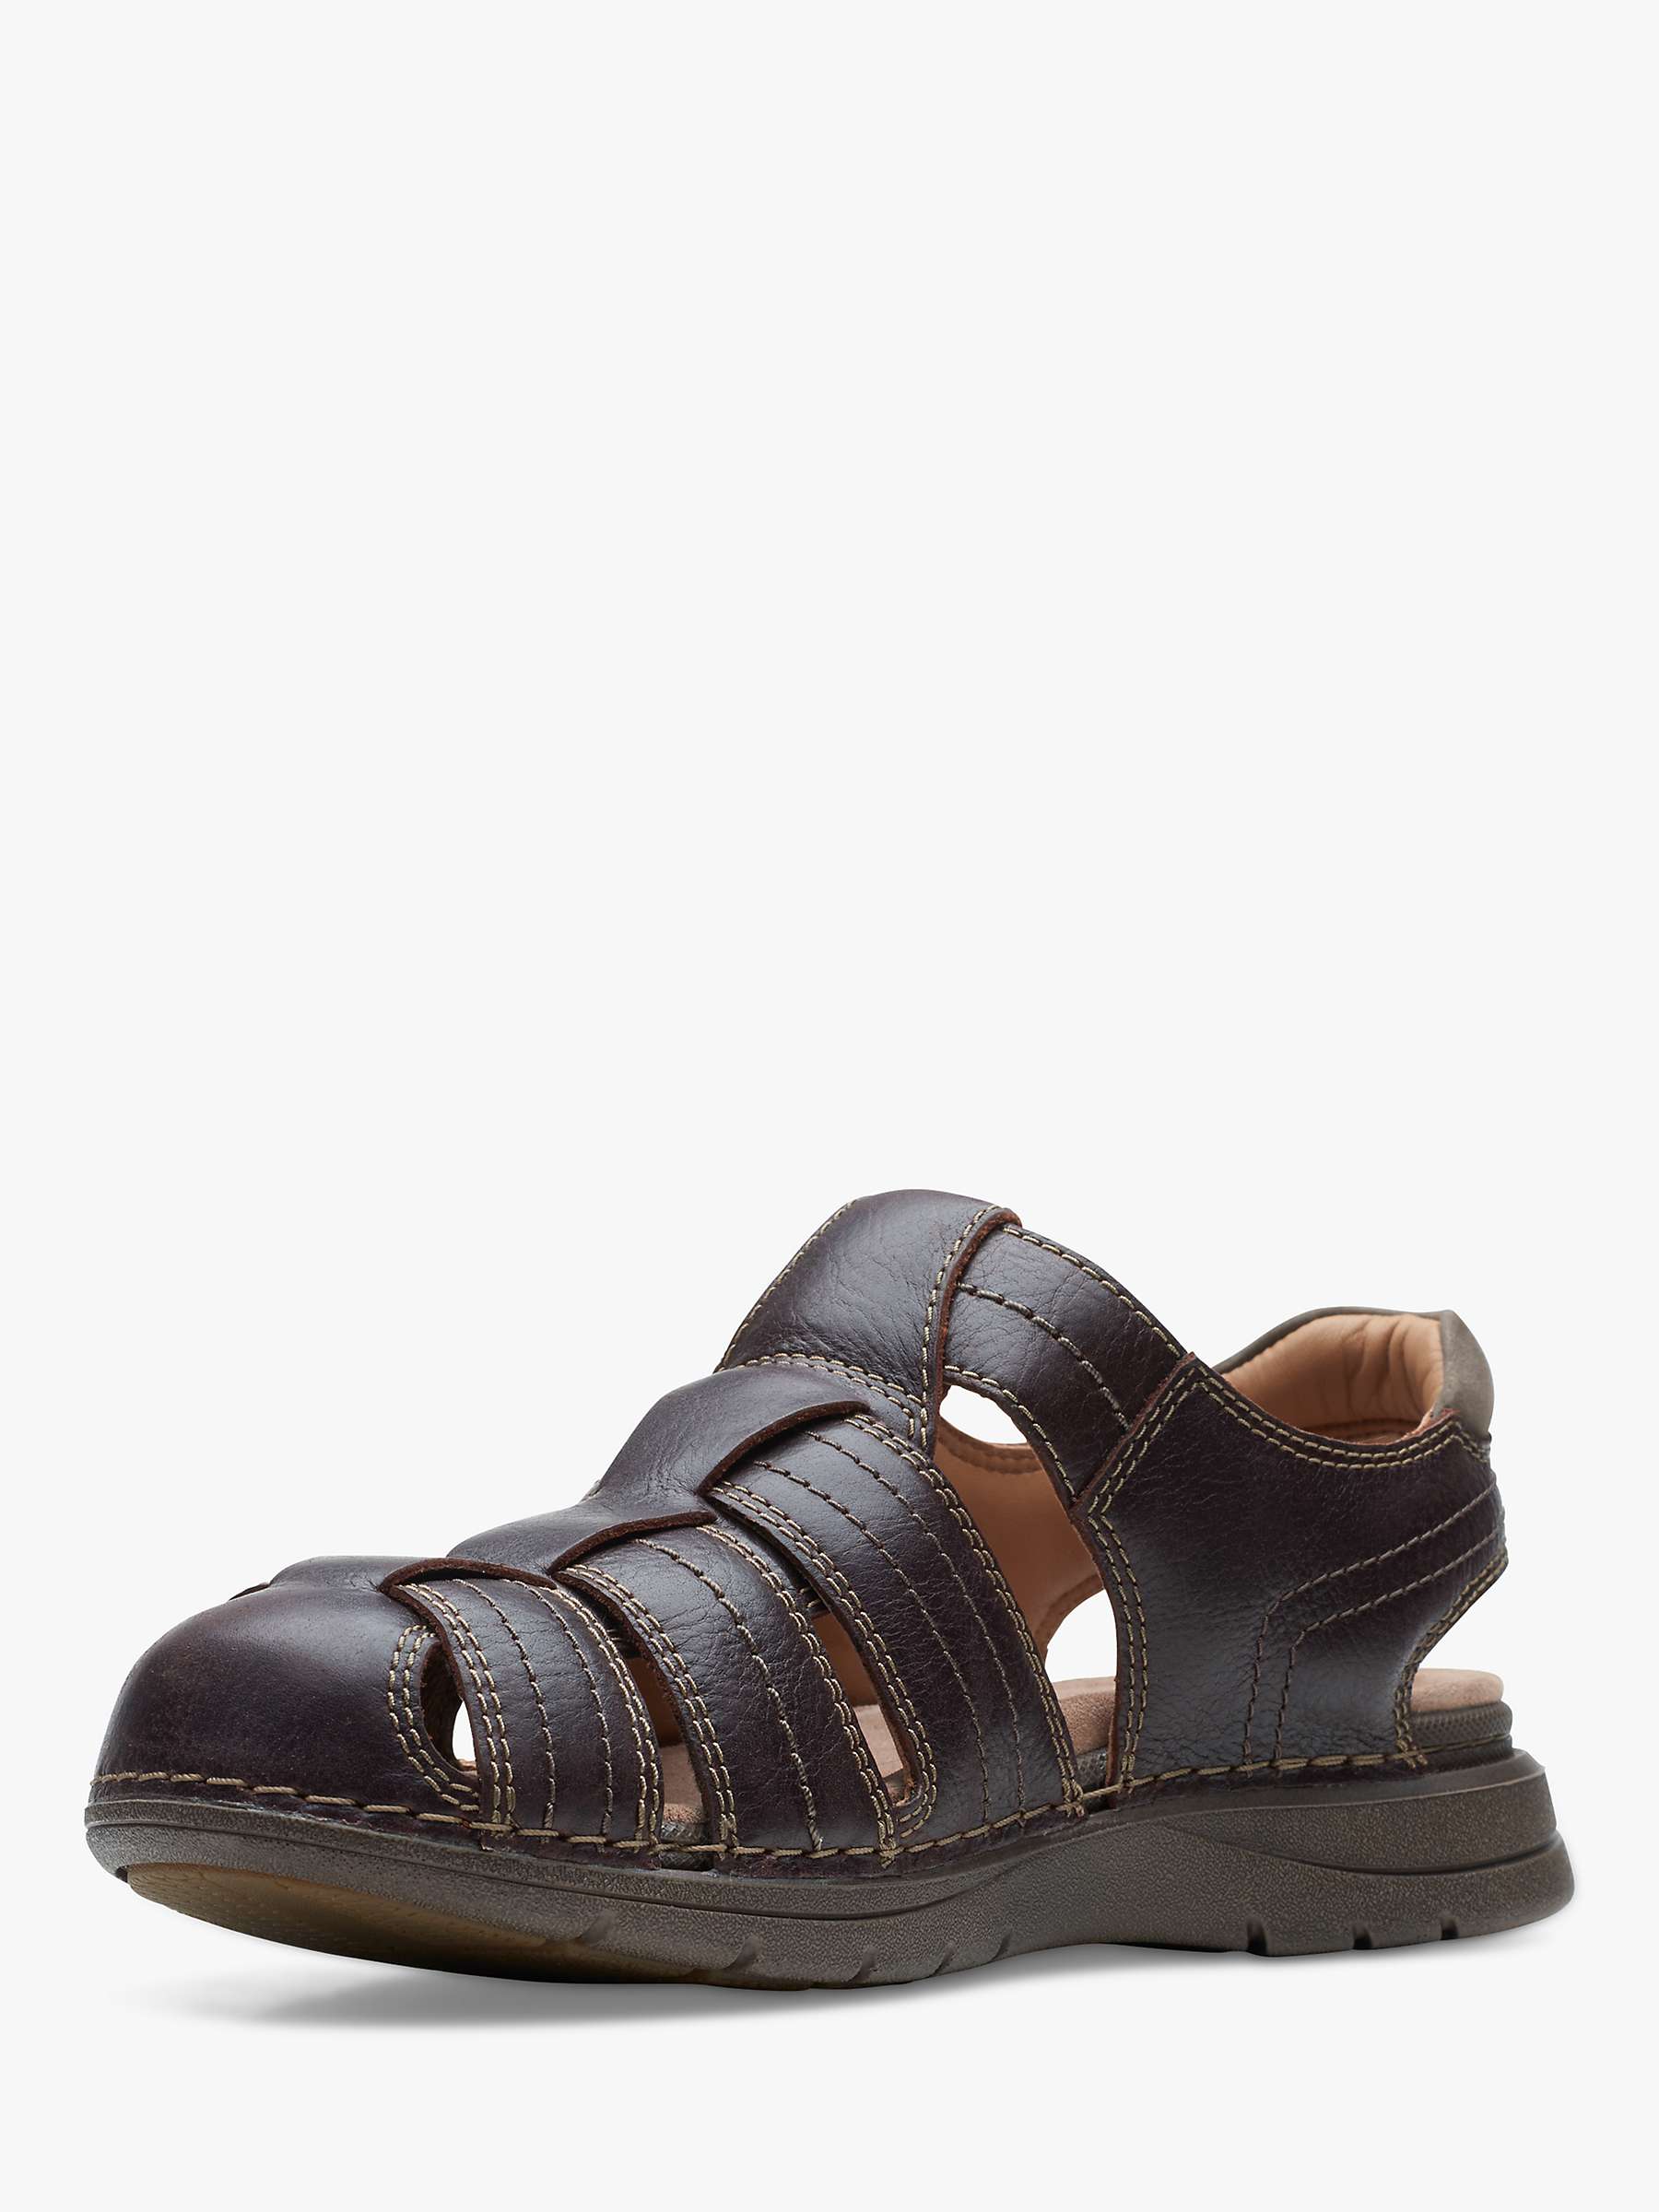 Buy Clarks Nature Limit Combination Leather Sandals Online at johnlewis.com